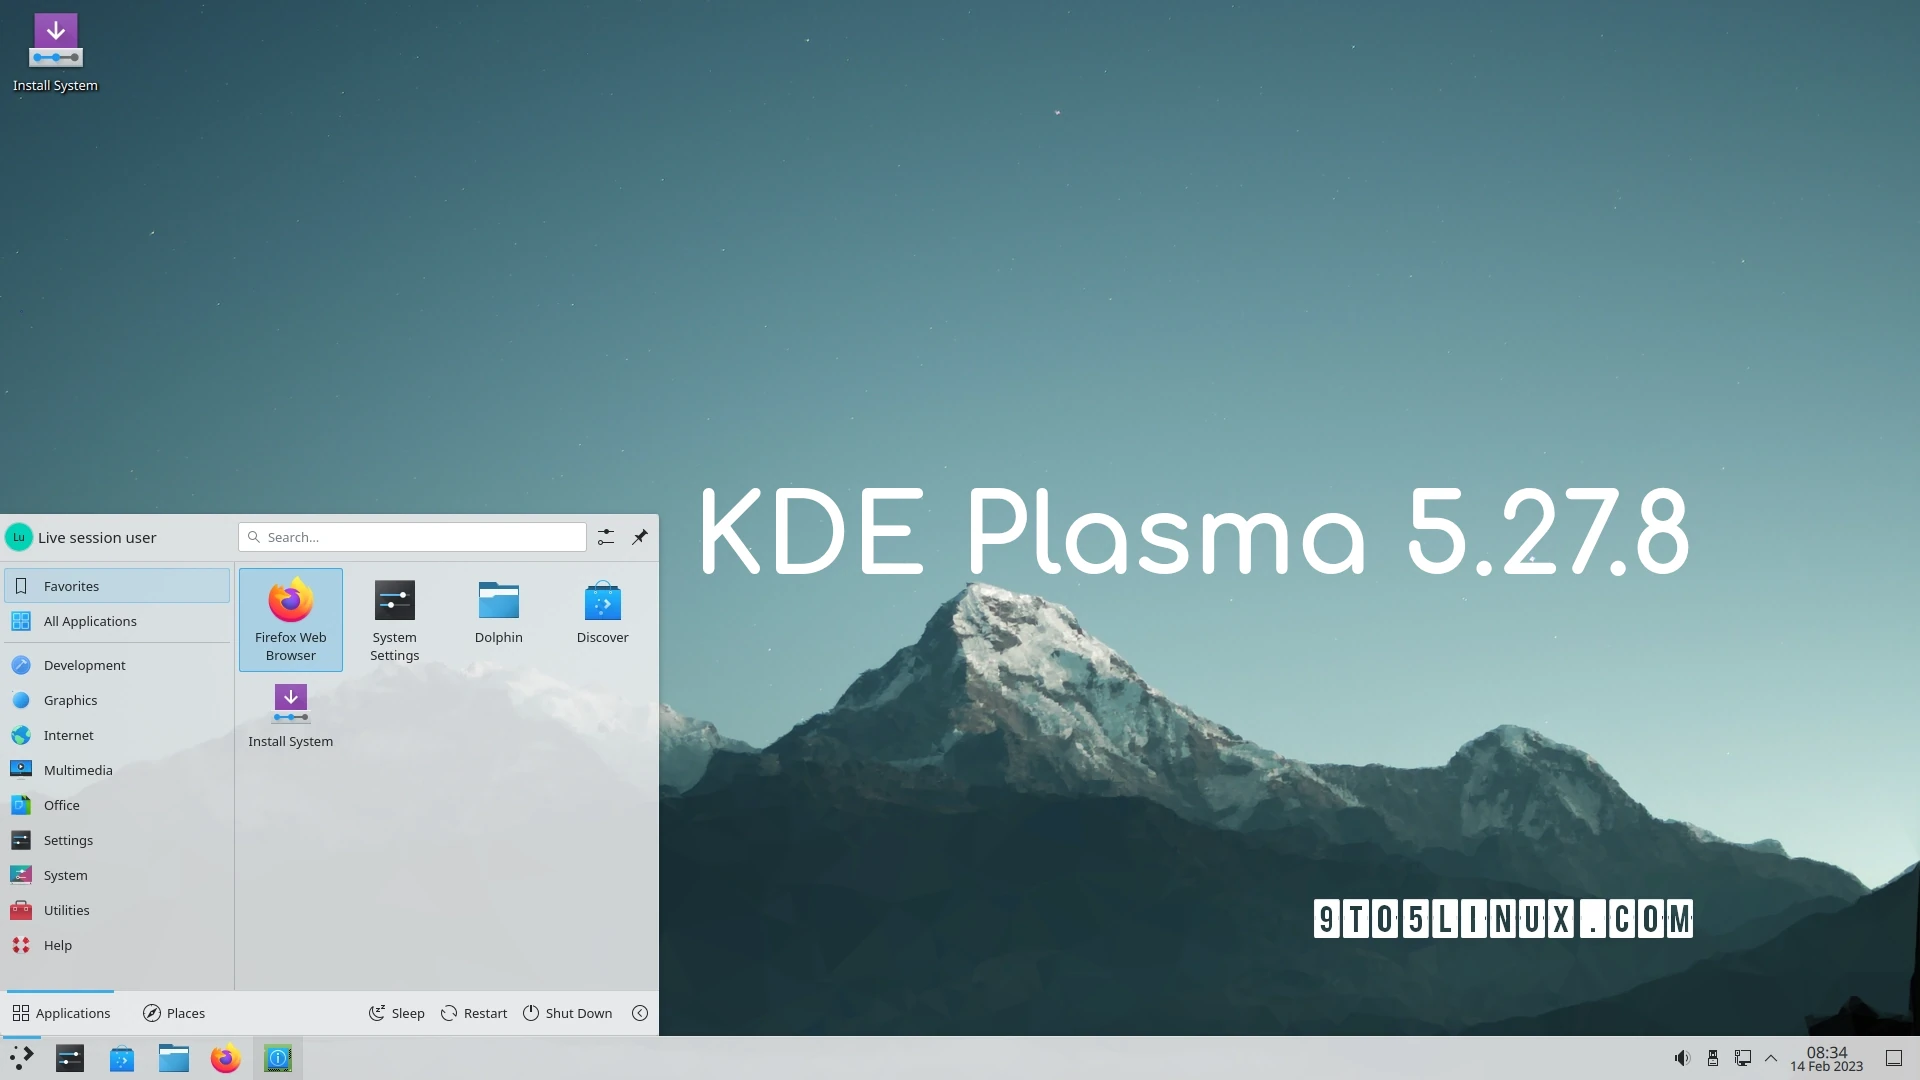 KDE Plasma 5.27.8 Improves Hybrid Sleep and Monitoring of NVIDIA GPUs